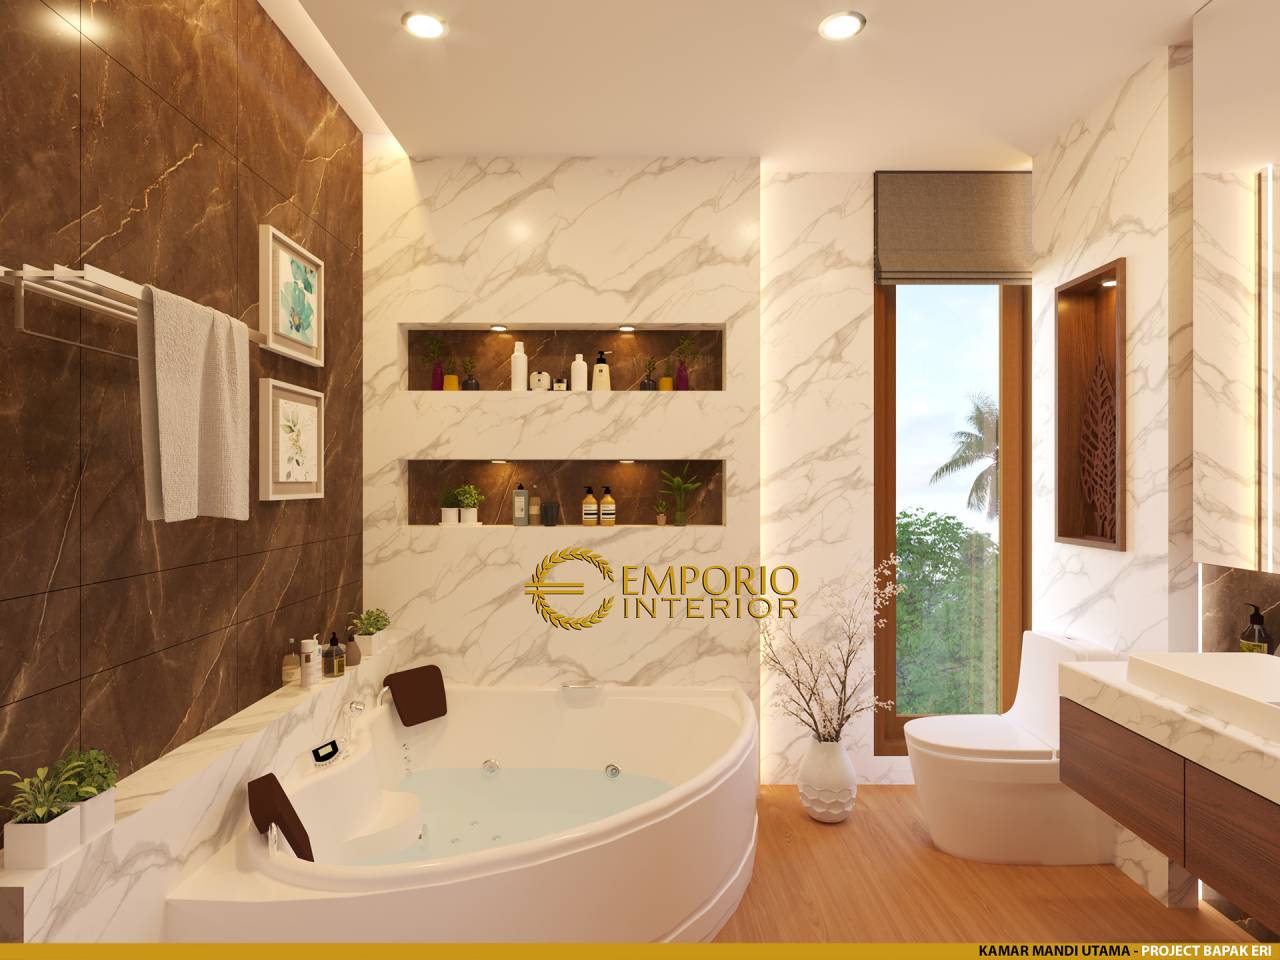 10 Ide Desain Interior Kamar Mandi Modern Mewah Dengan Bathtub Part 2 Blog